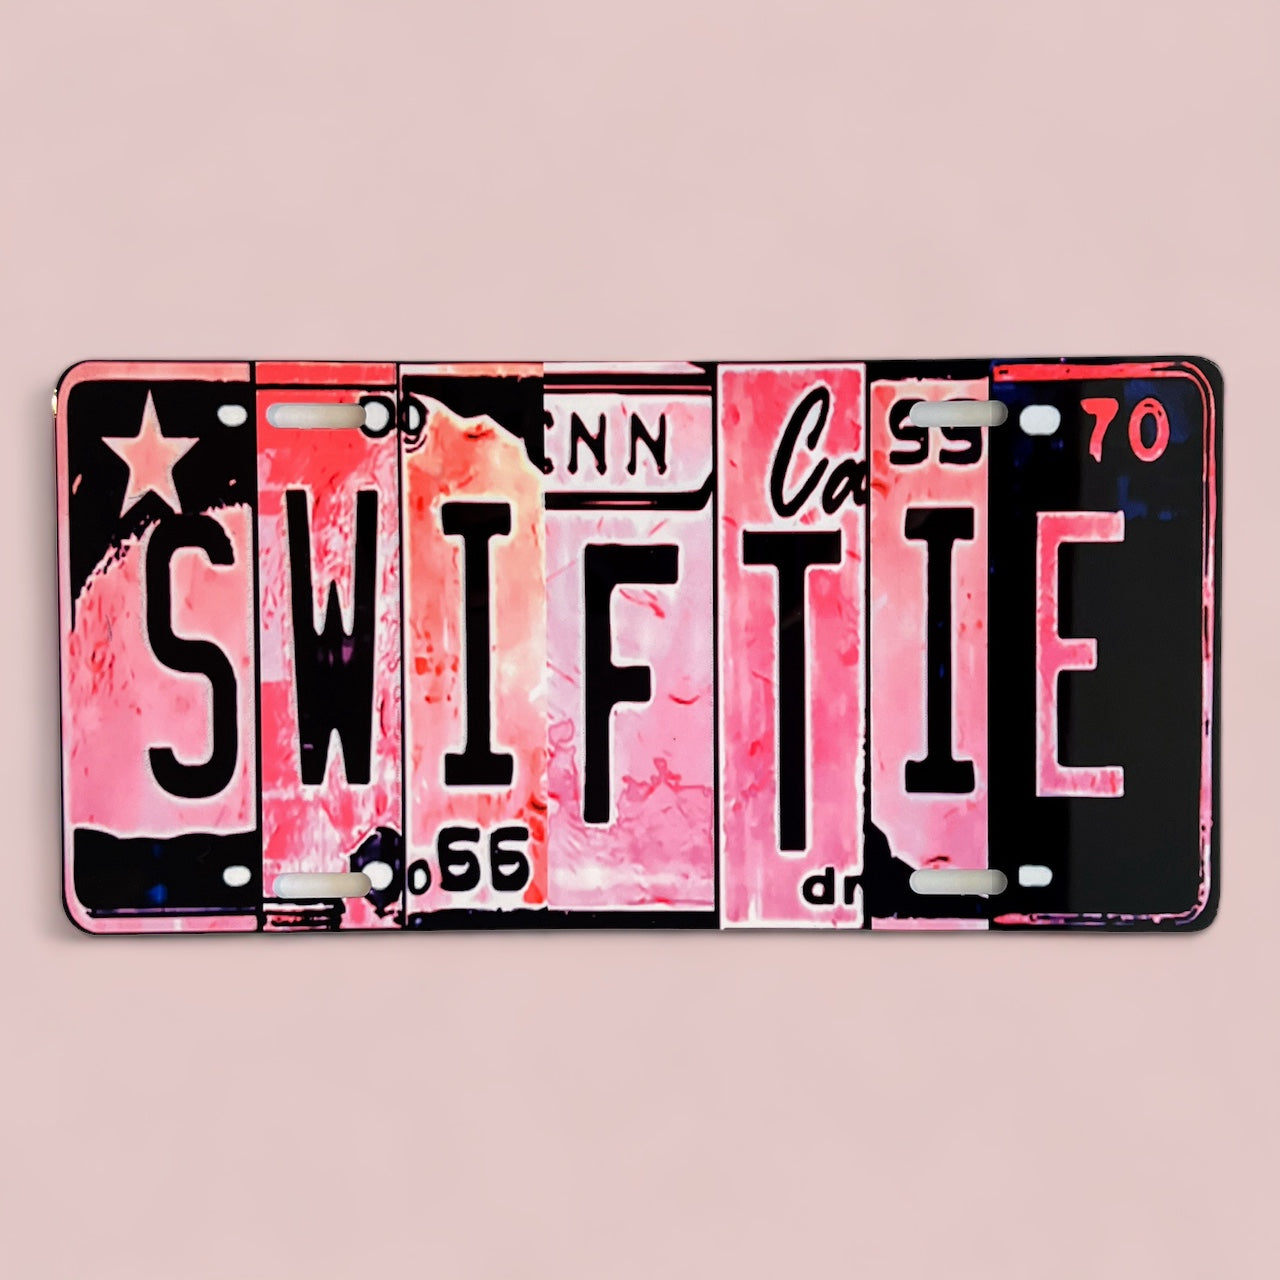 Swiftie License Plate